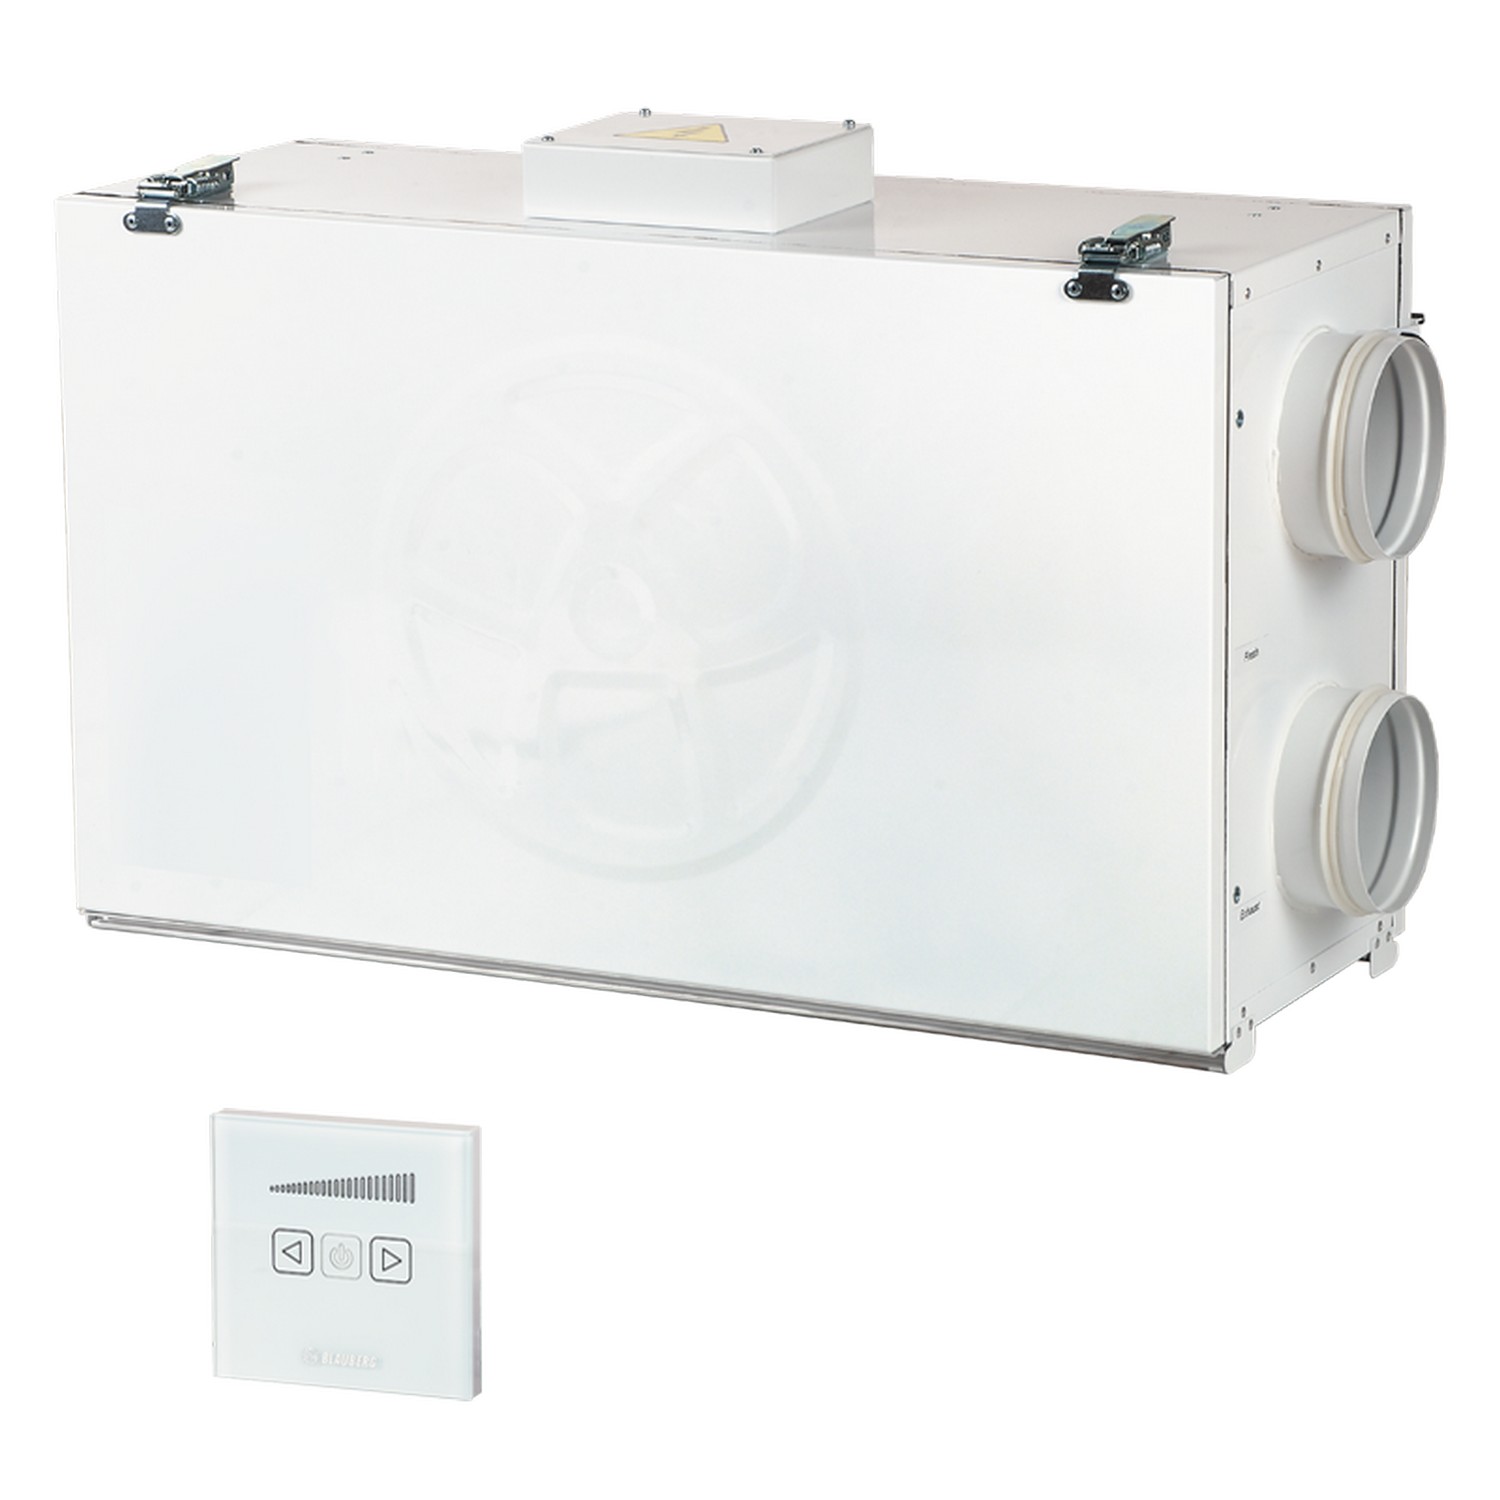 Приточно-вытяжная установка Blauberg Komfort Ultra L250-H S12 white в интернет-магазине, главное фото